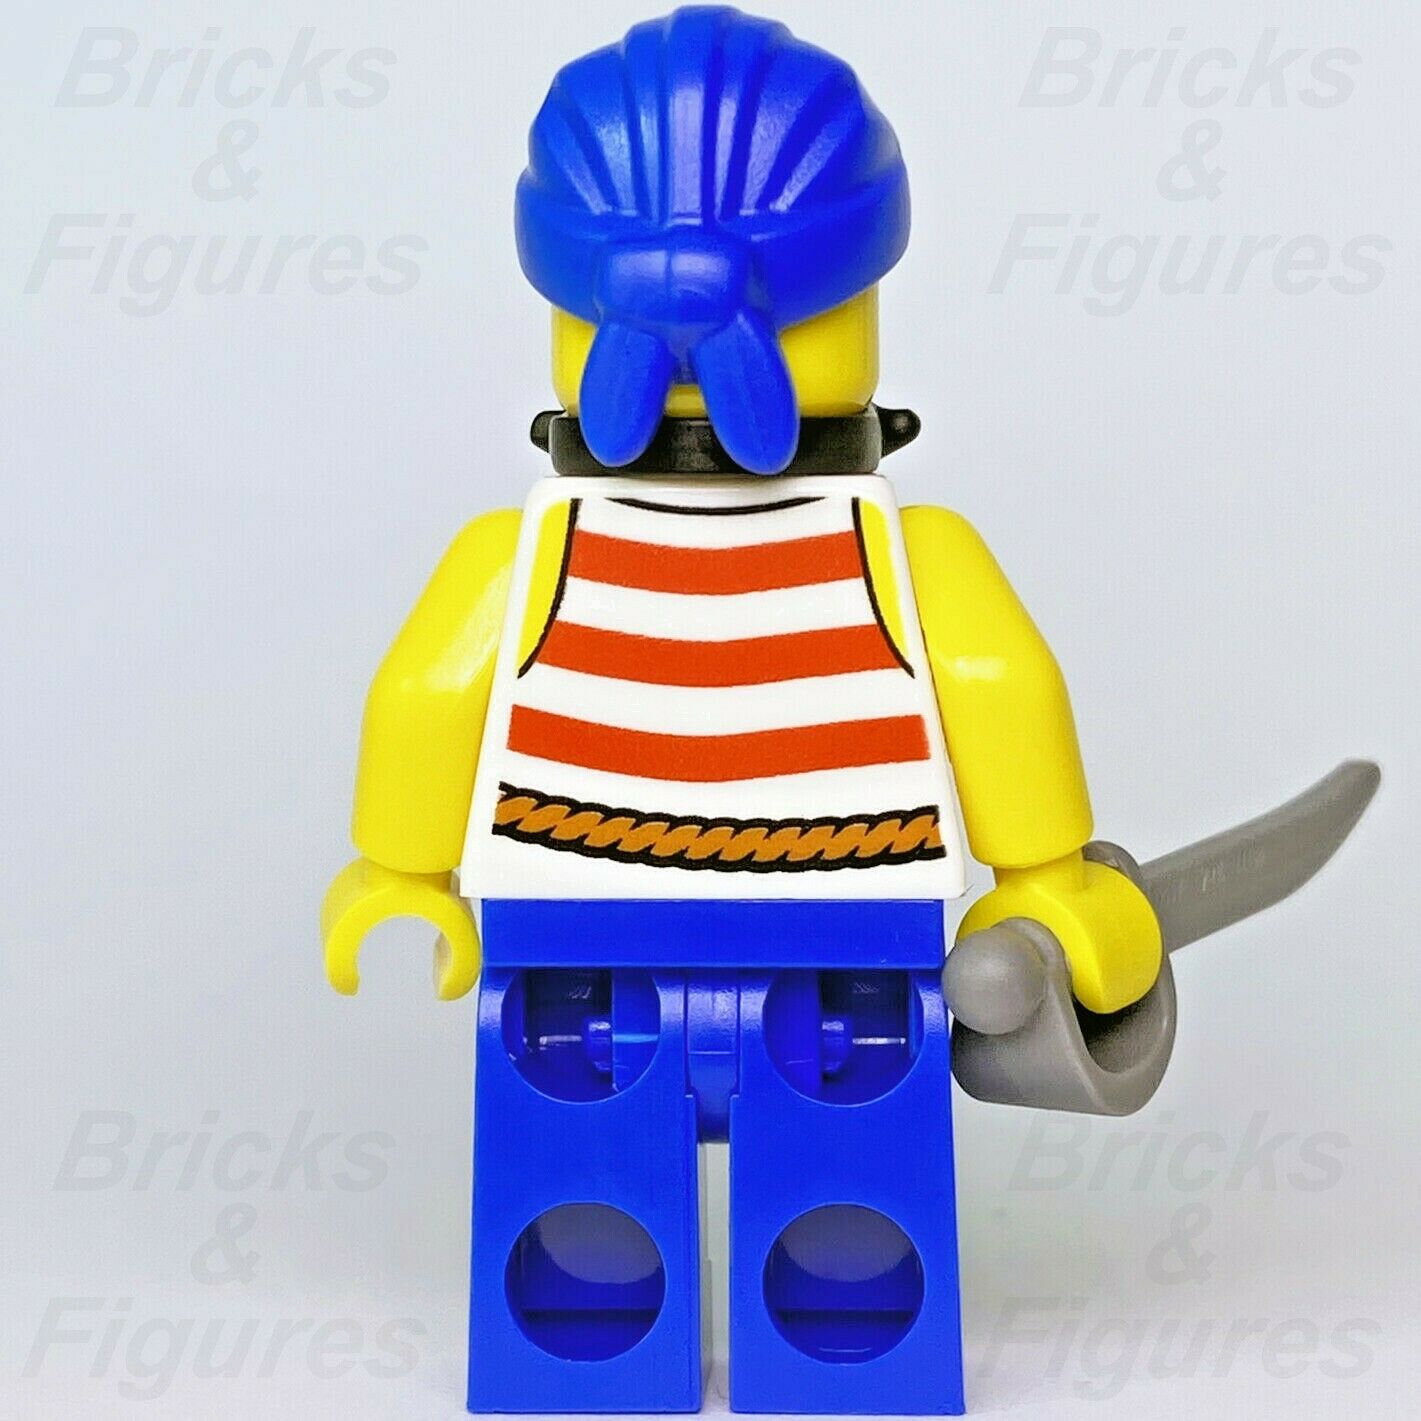 New Ideas LEGO Port Pirates Minifigure with Sword from set 21322 idea069 - Bricks & Figures